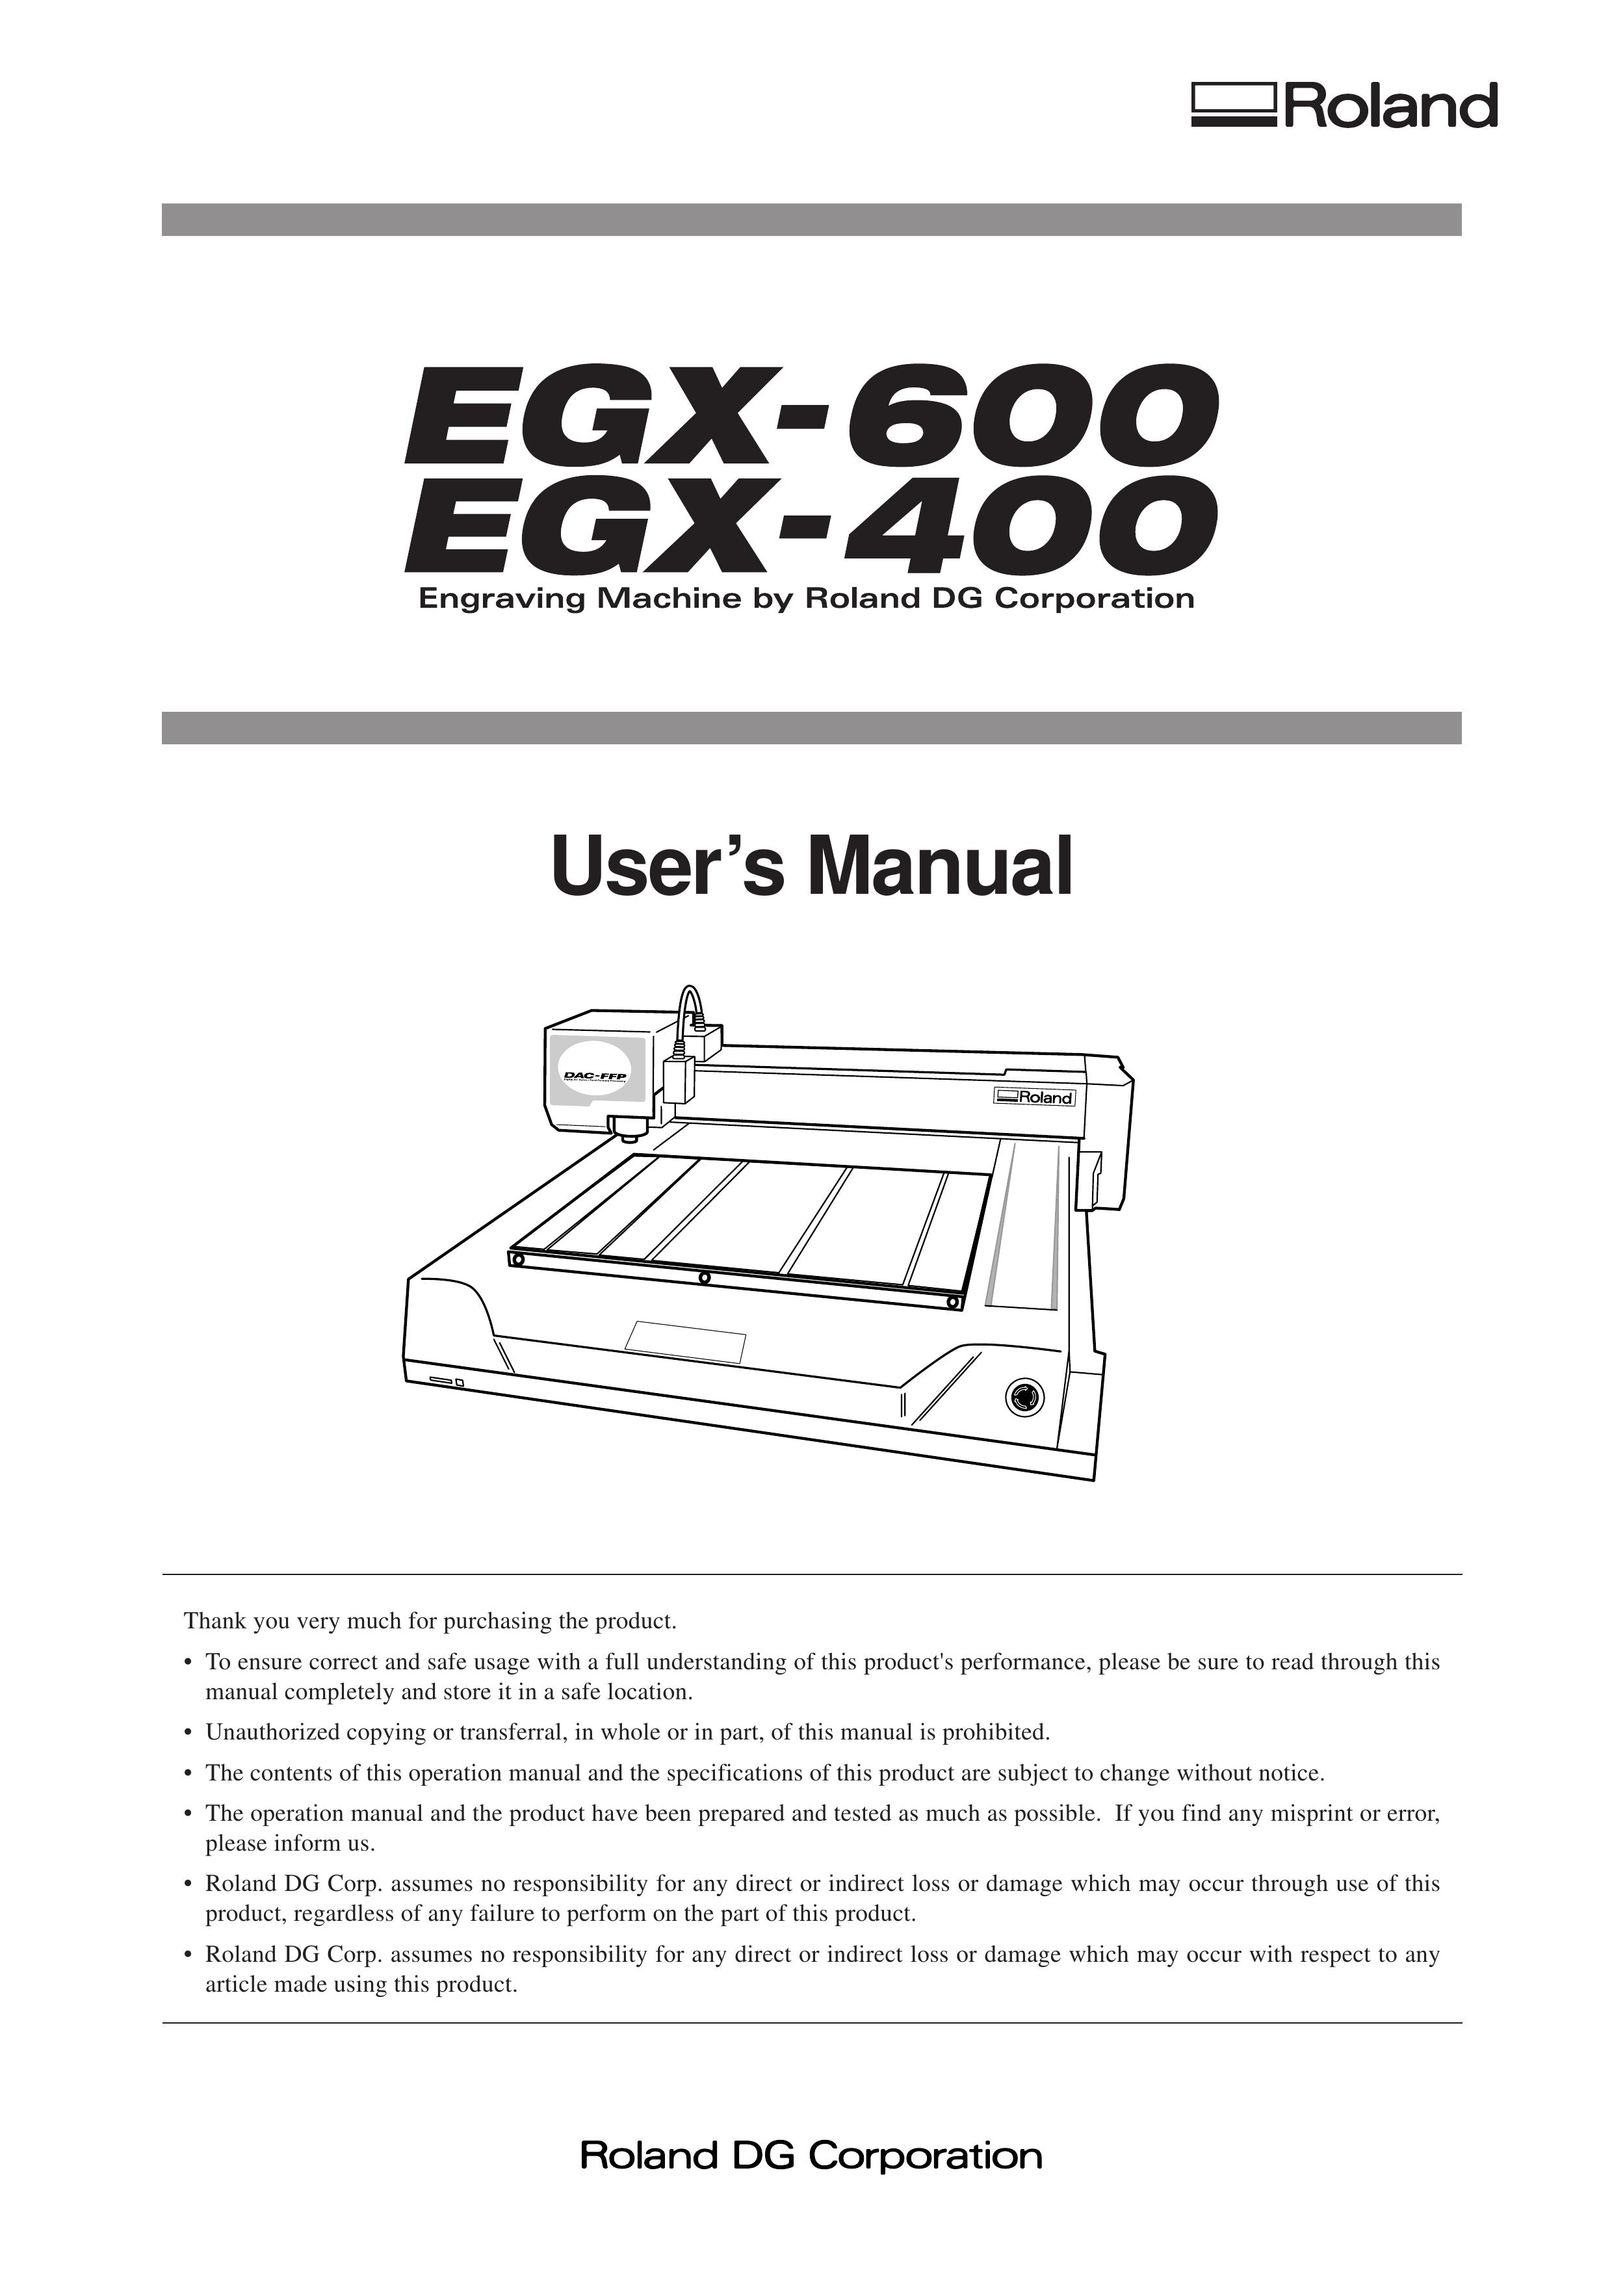 IBM EGX-400 Engraver User Manual